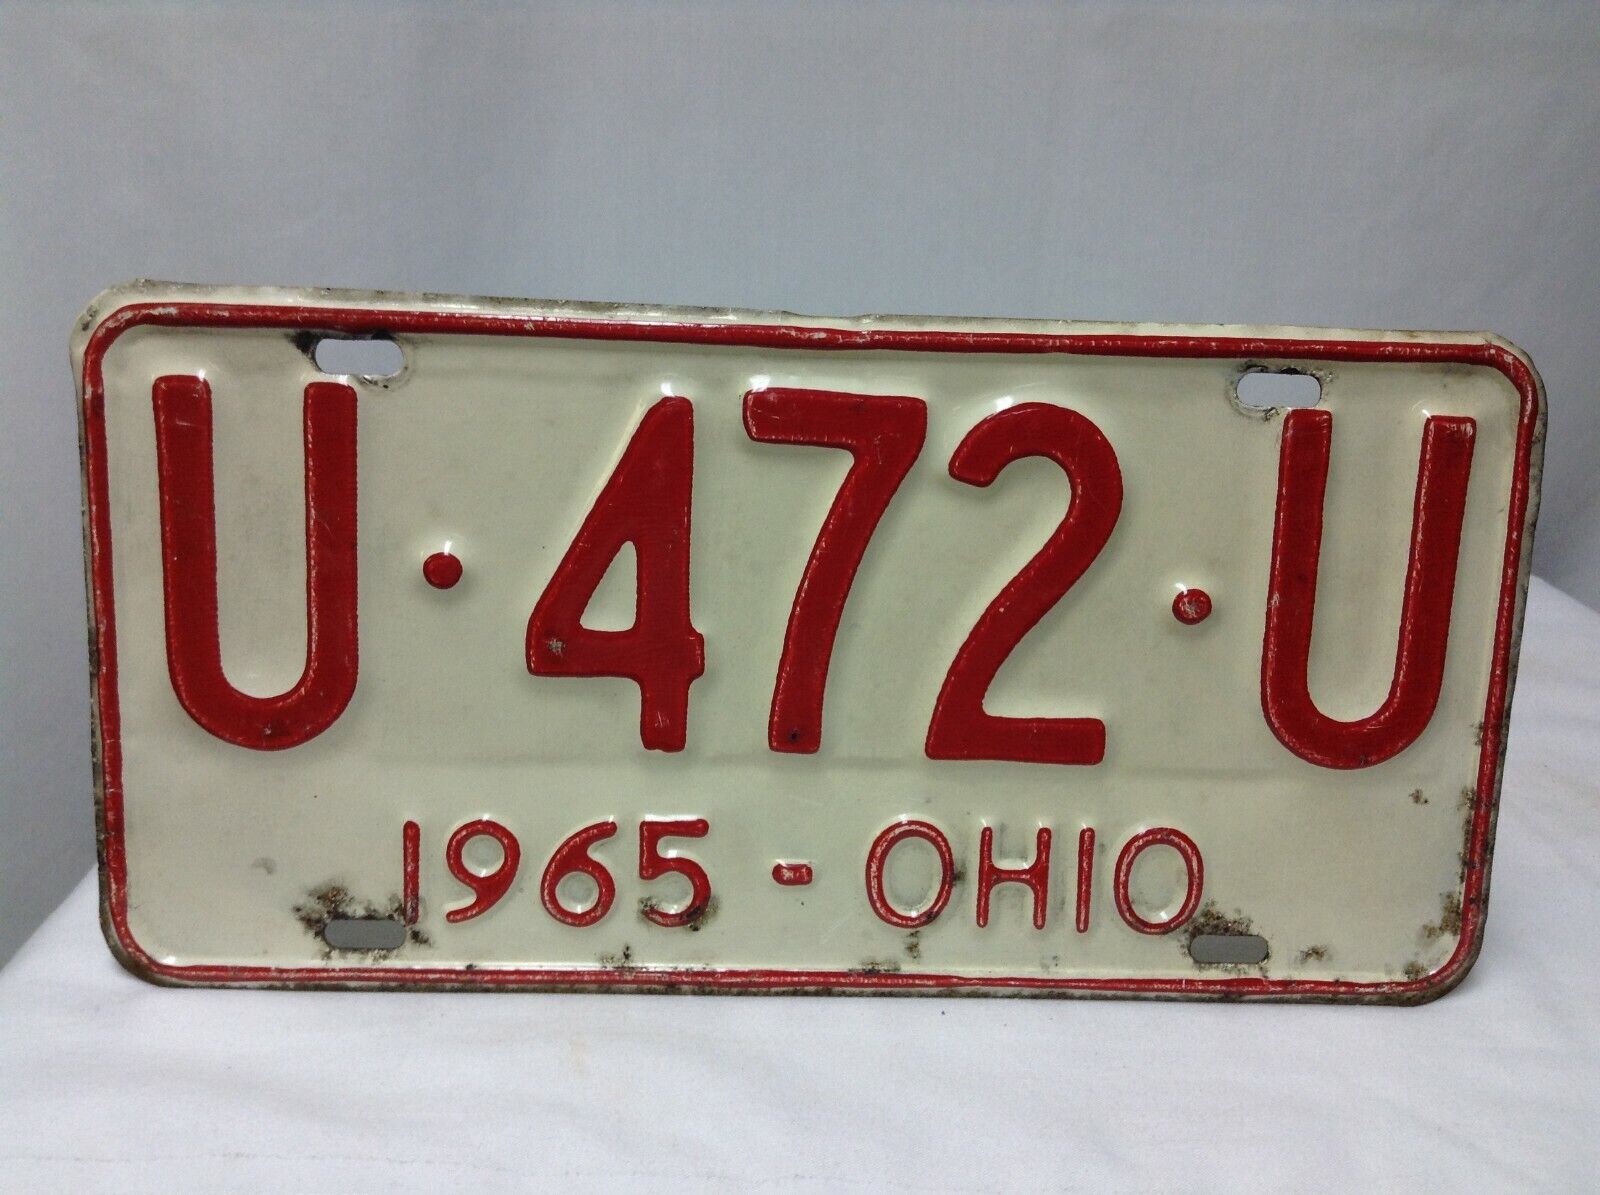 1965 Ohio License Plate U-472-u